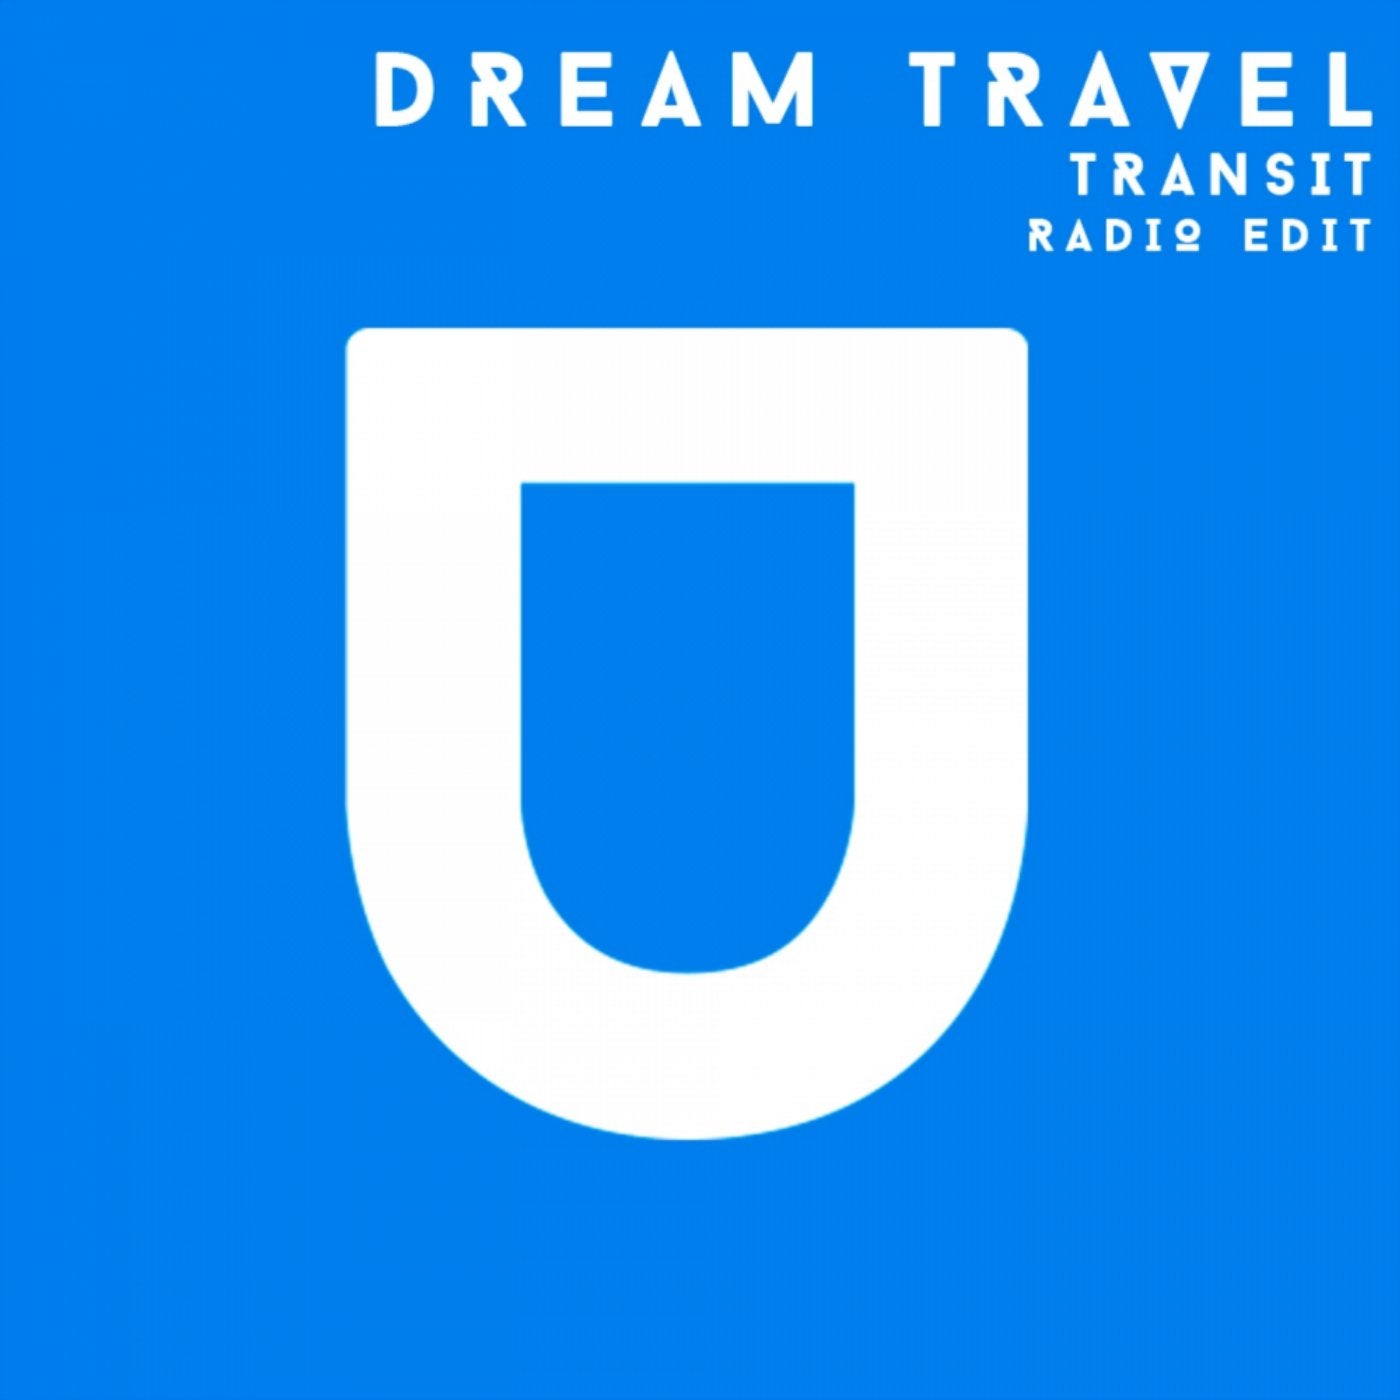 Transit (Radio Edit)